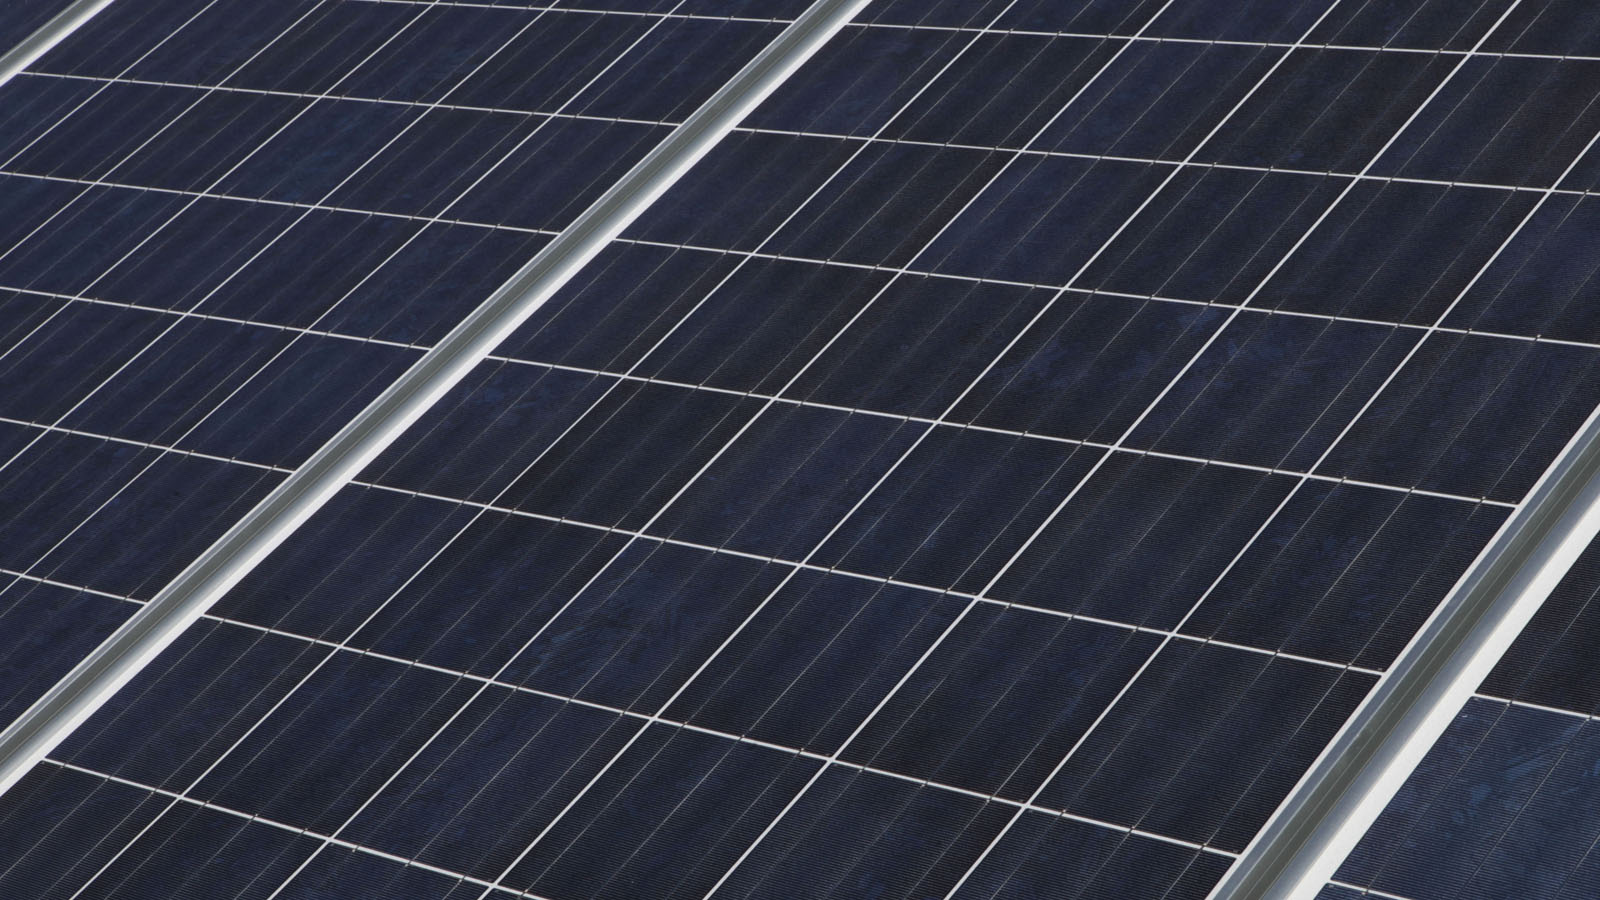 Enlight Renewable Energy's solar park has 180,000 panels. Photo by Nati Shohat/Flash90